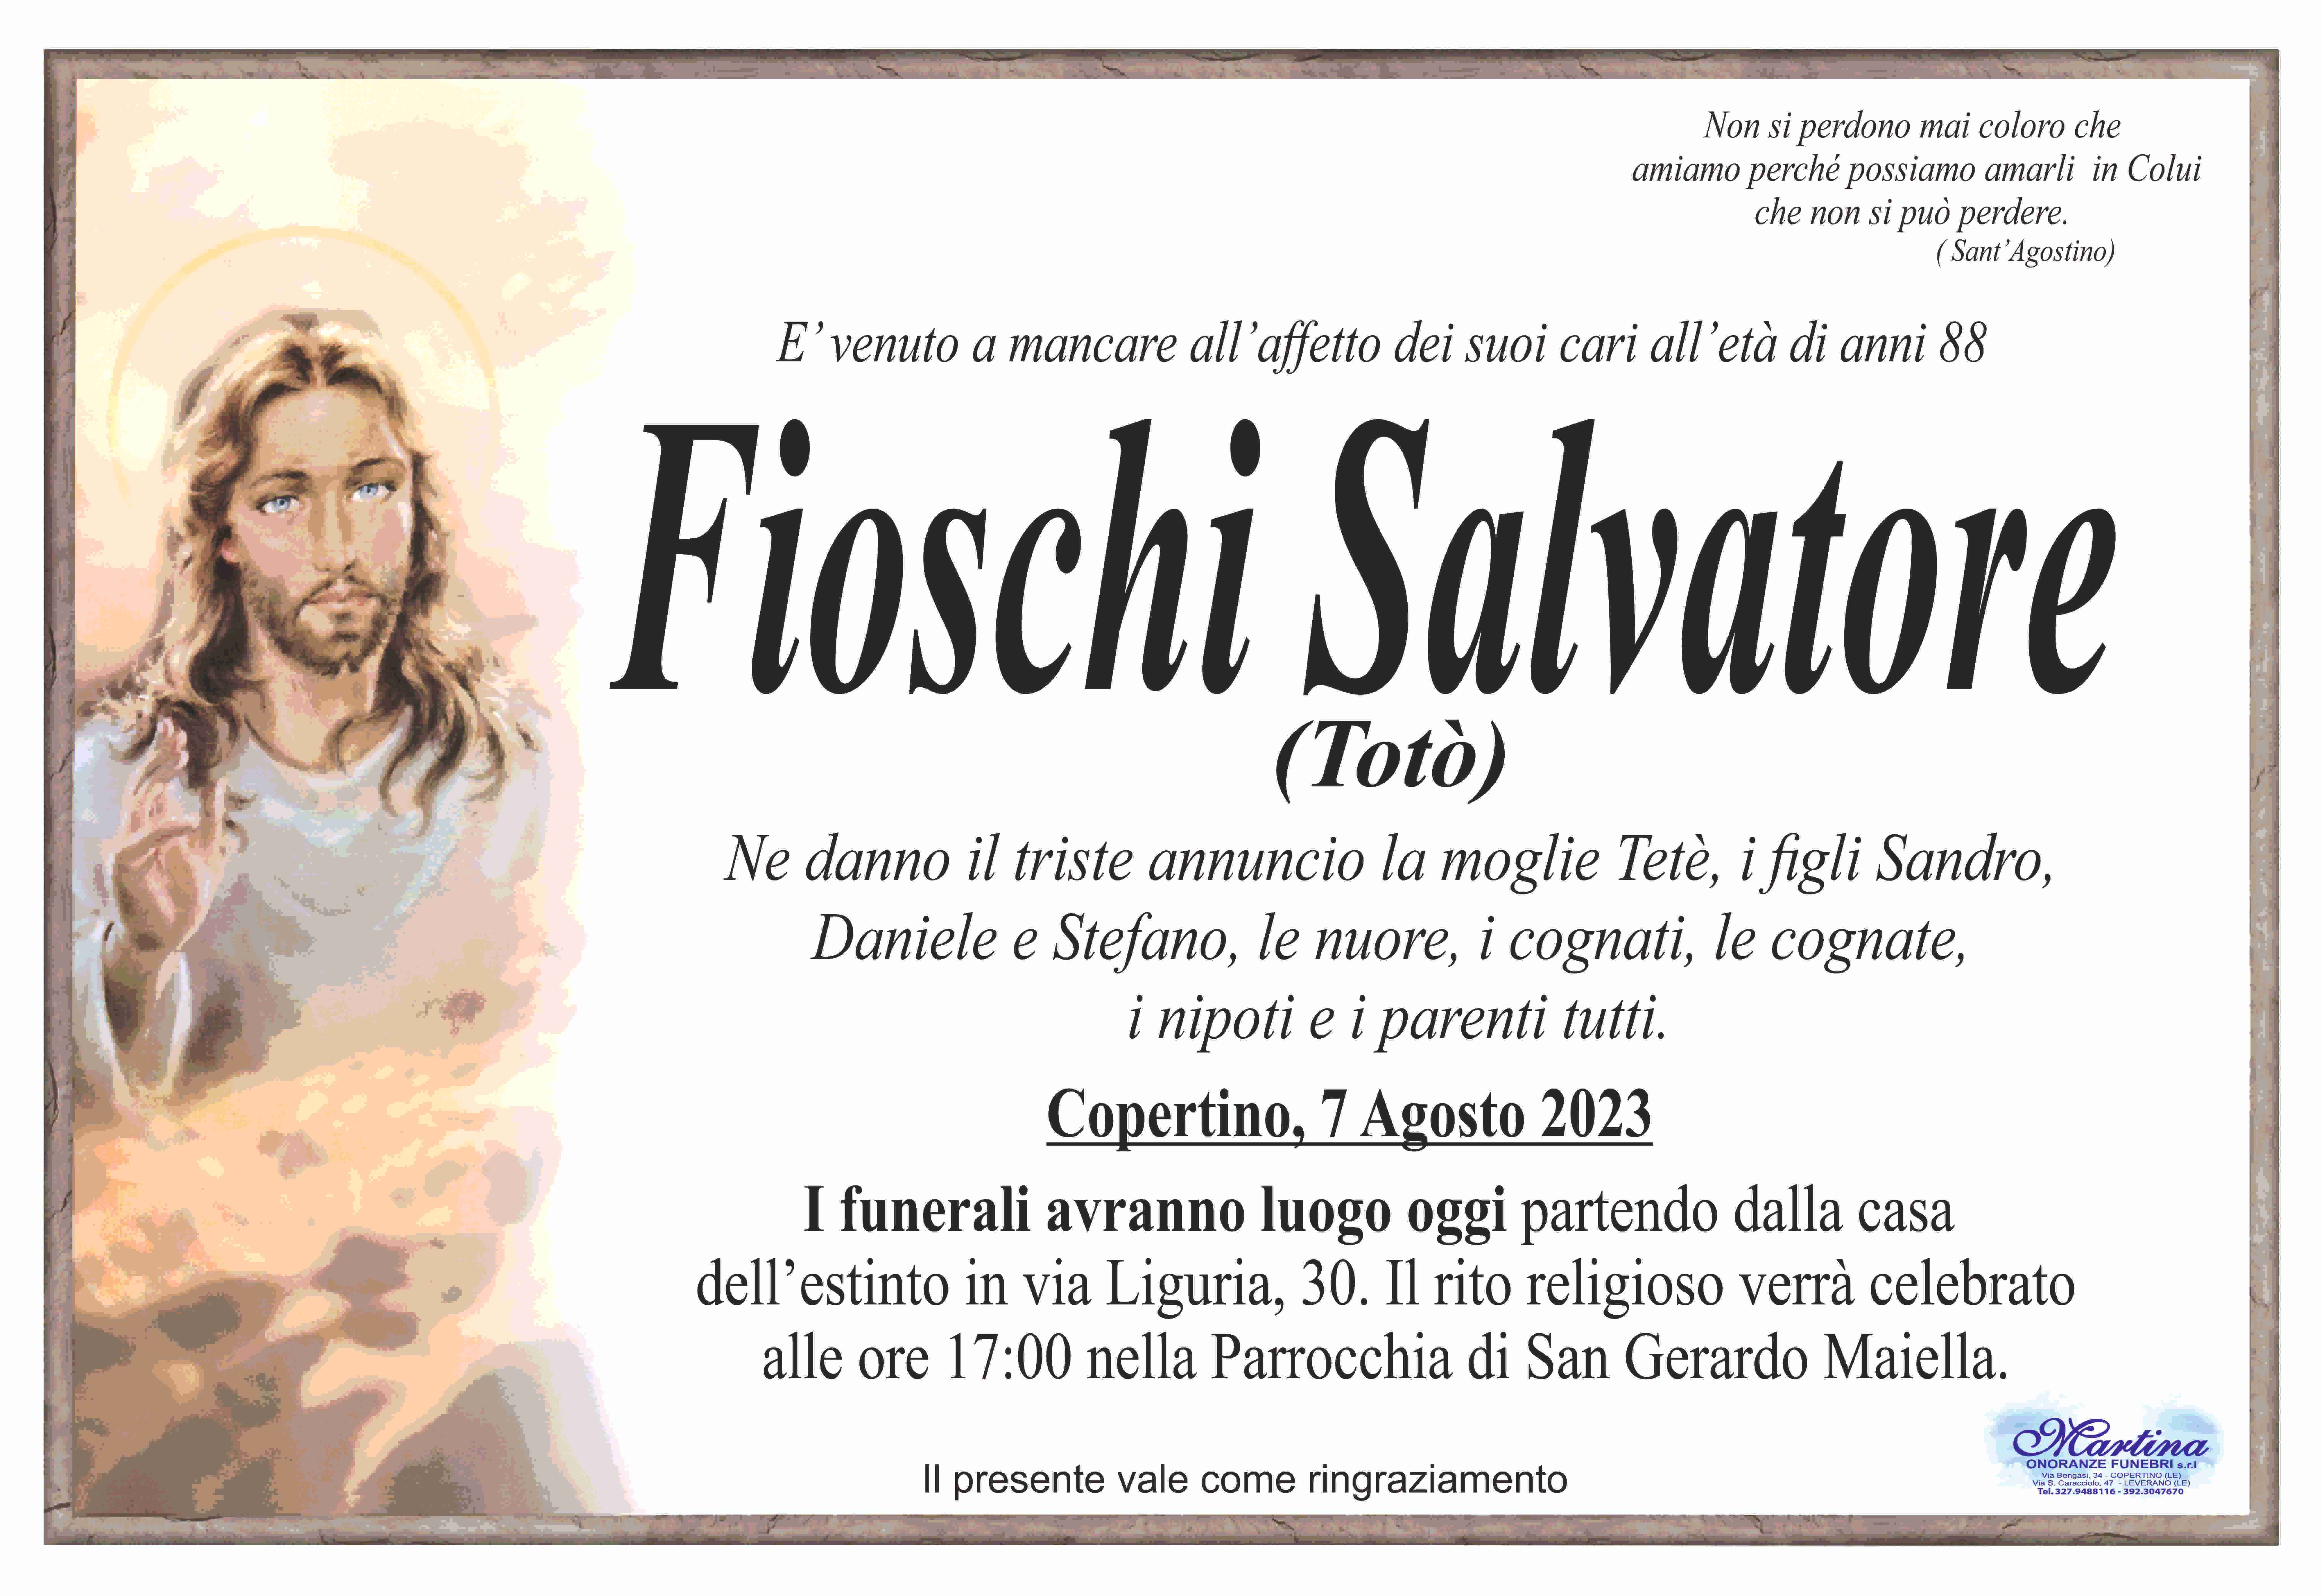 Salvatore Fioschi